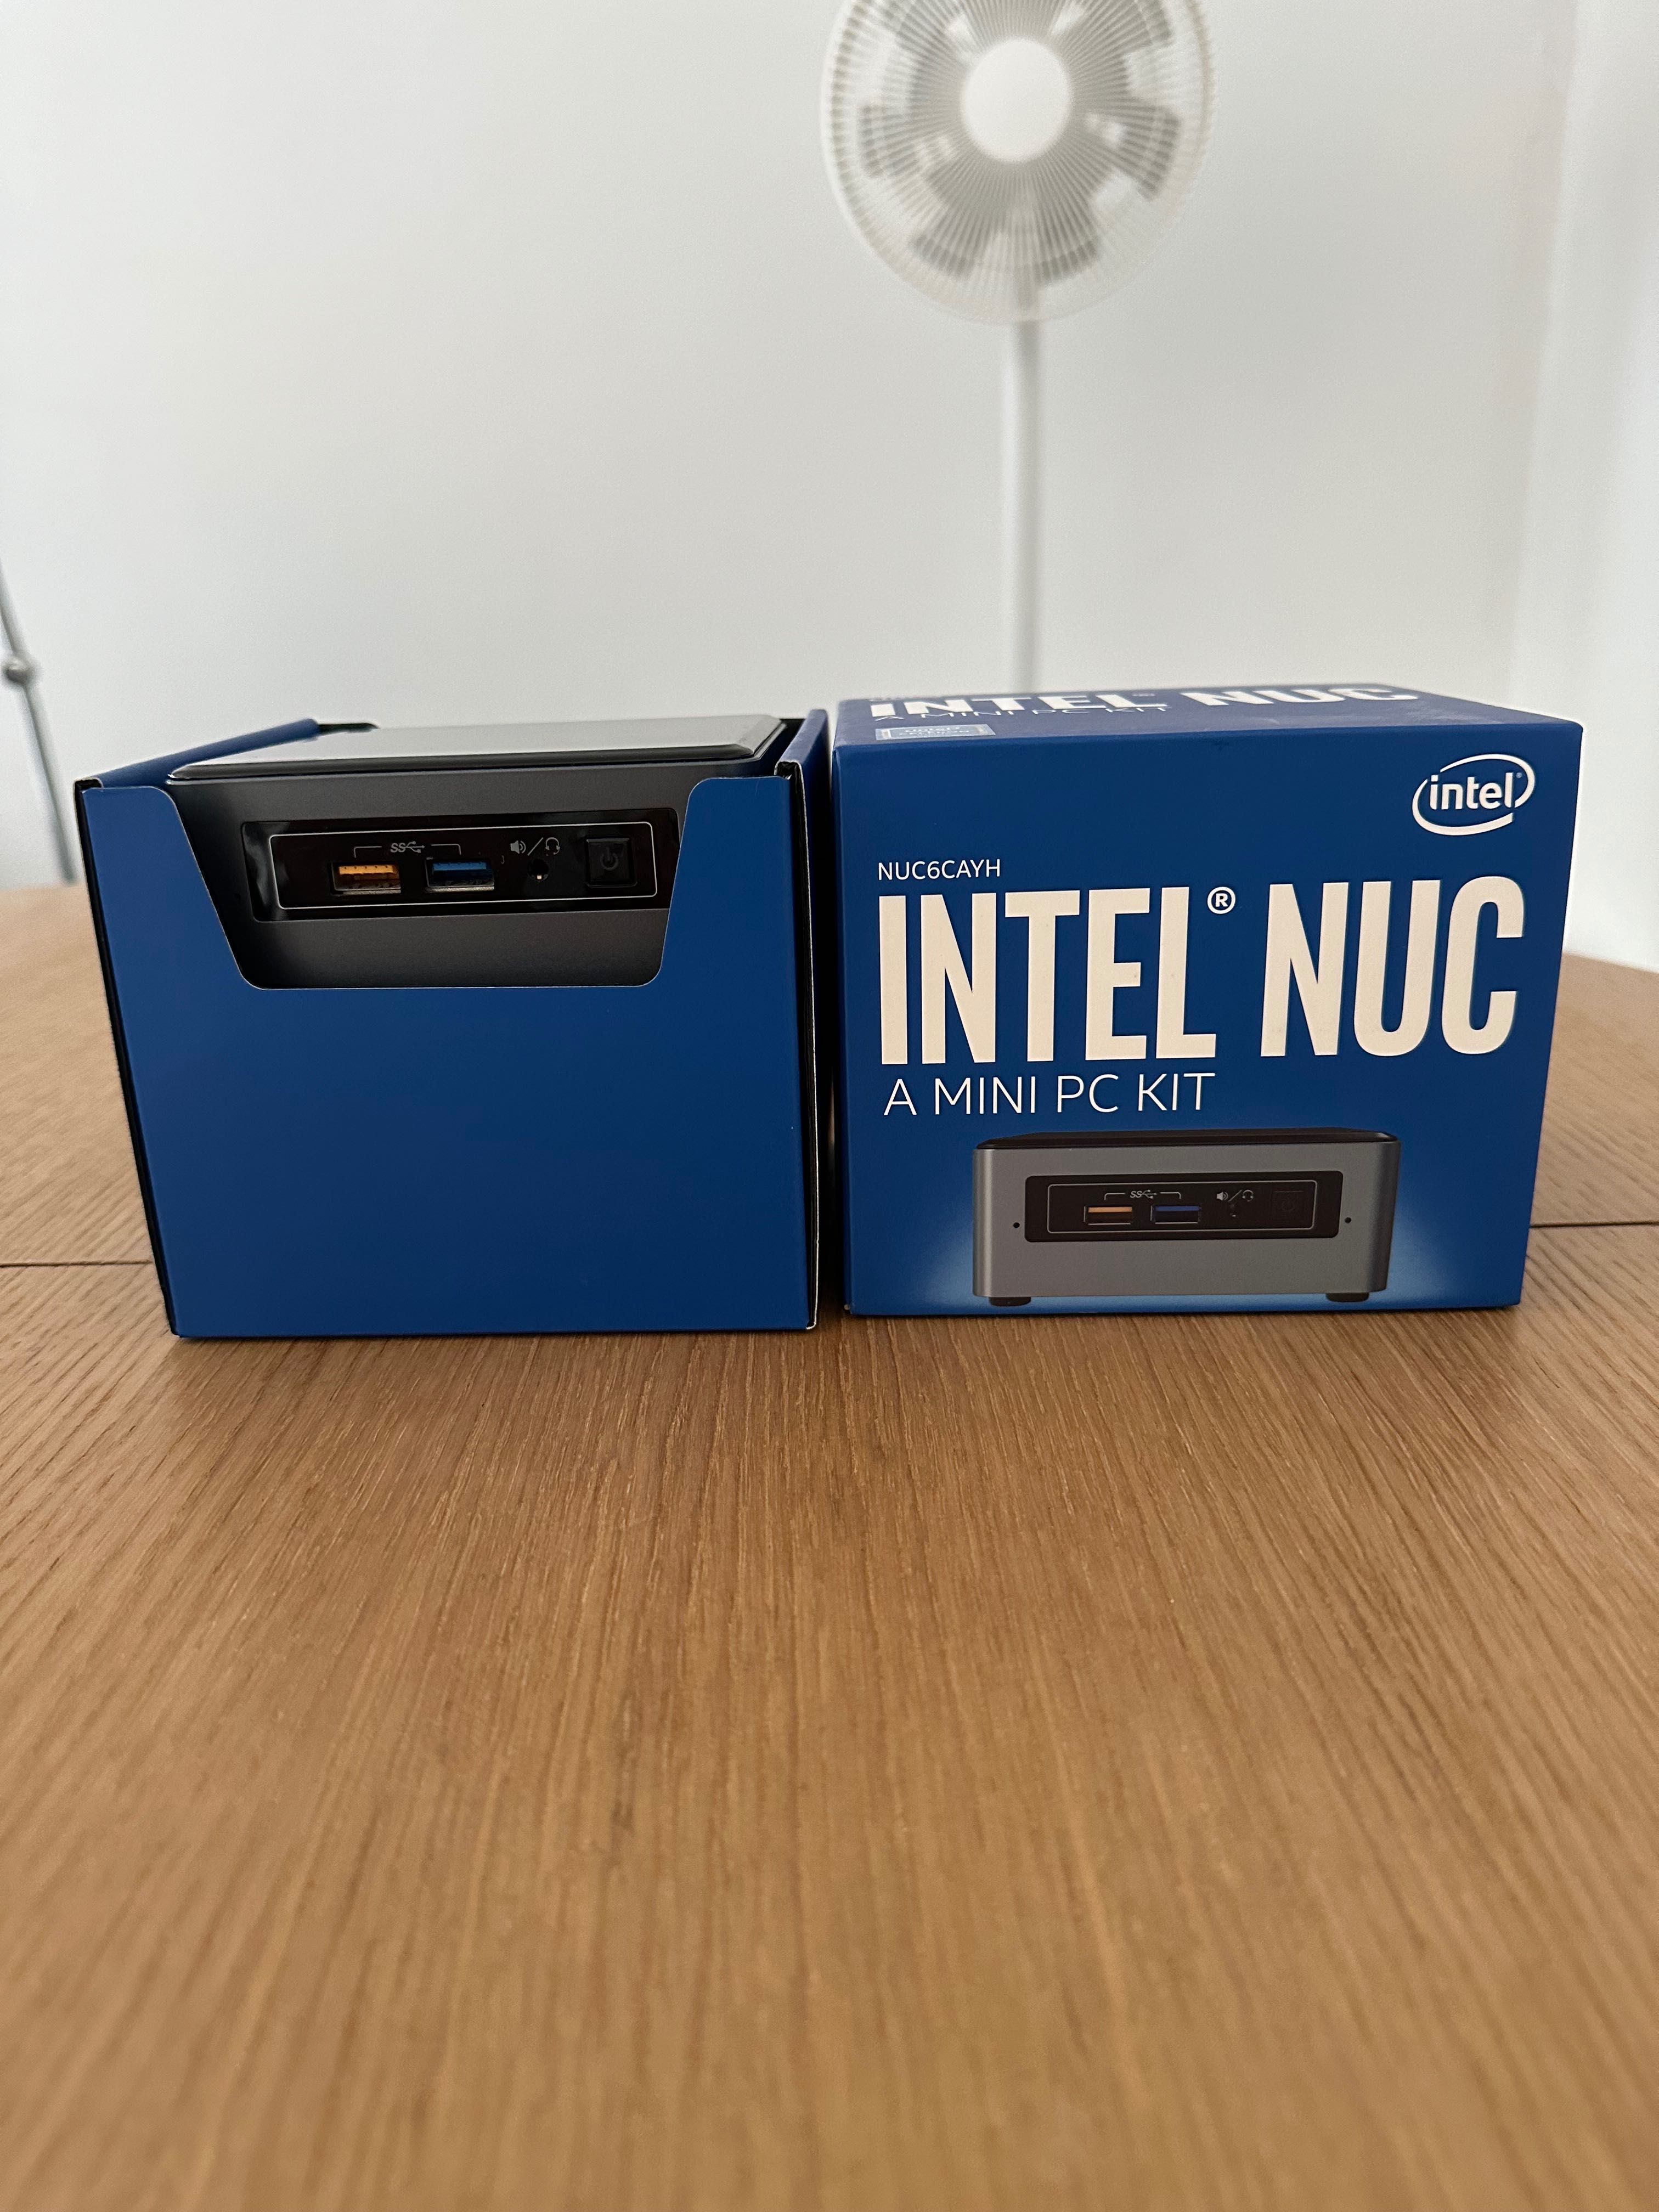 Mini PC KIT Intel NUC nuc6cayh